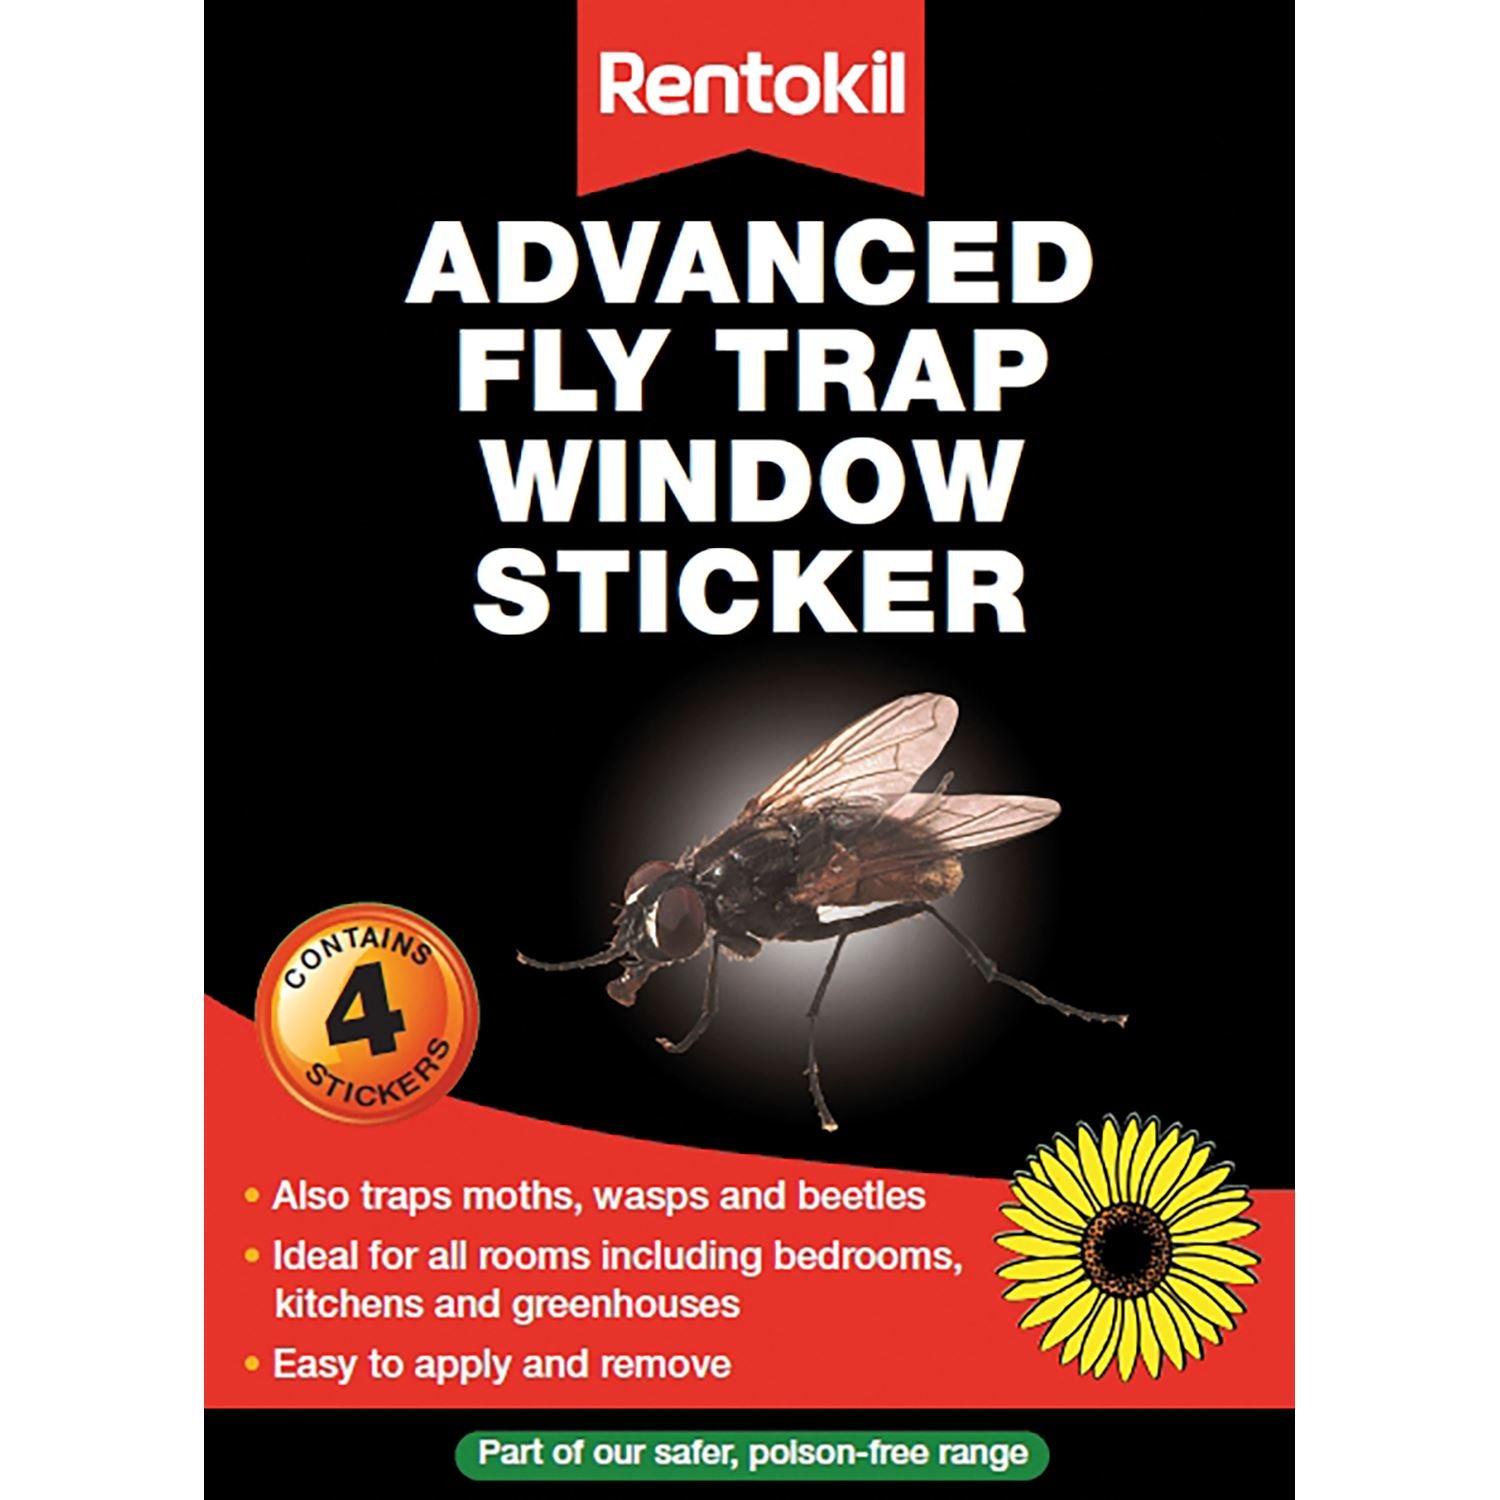 Rentokil Advanced Fly Trap Window Sticker - Just Horse Riders